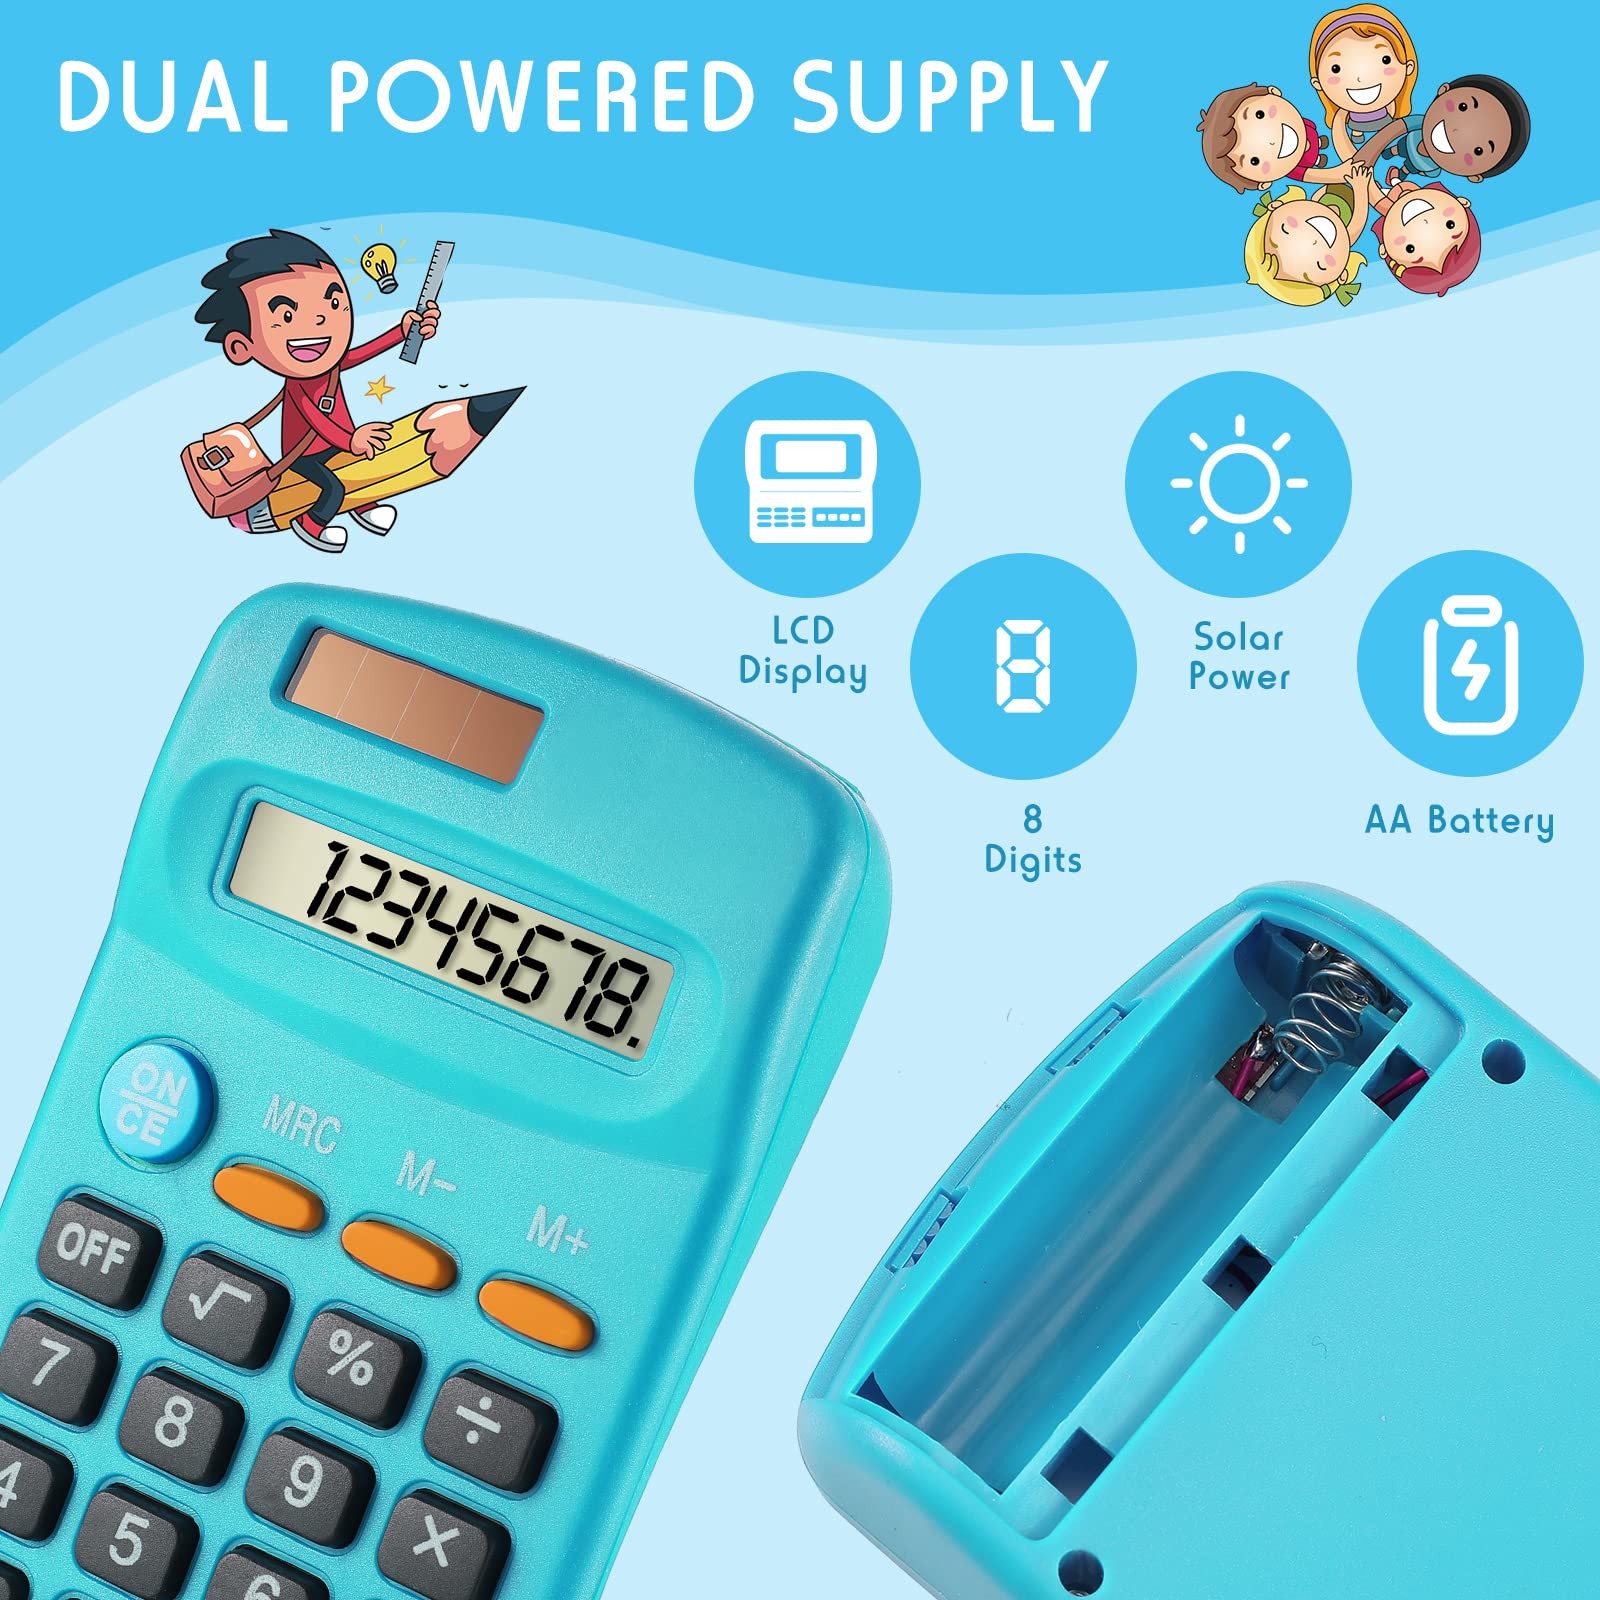 Konohan 20 Packs Pocket Size Mini Calculator Basic Calculators for Students 8 Digit Display Solar Battery Dual Power Small Desktop Home Office School Kids, 4 Colors, Black,Blue,Purple